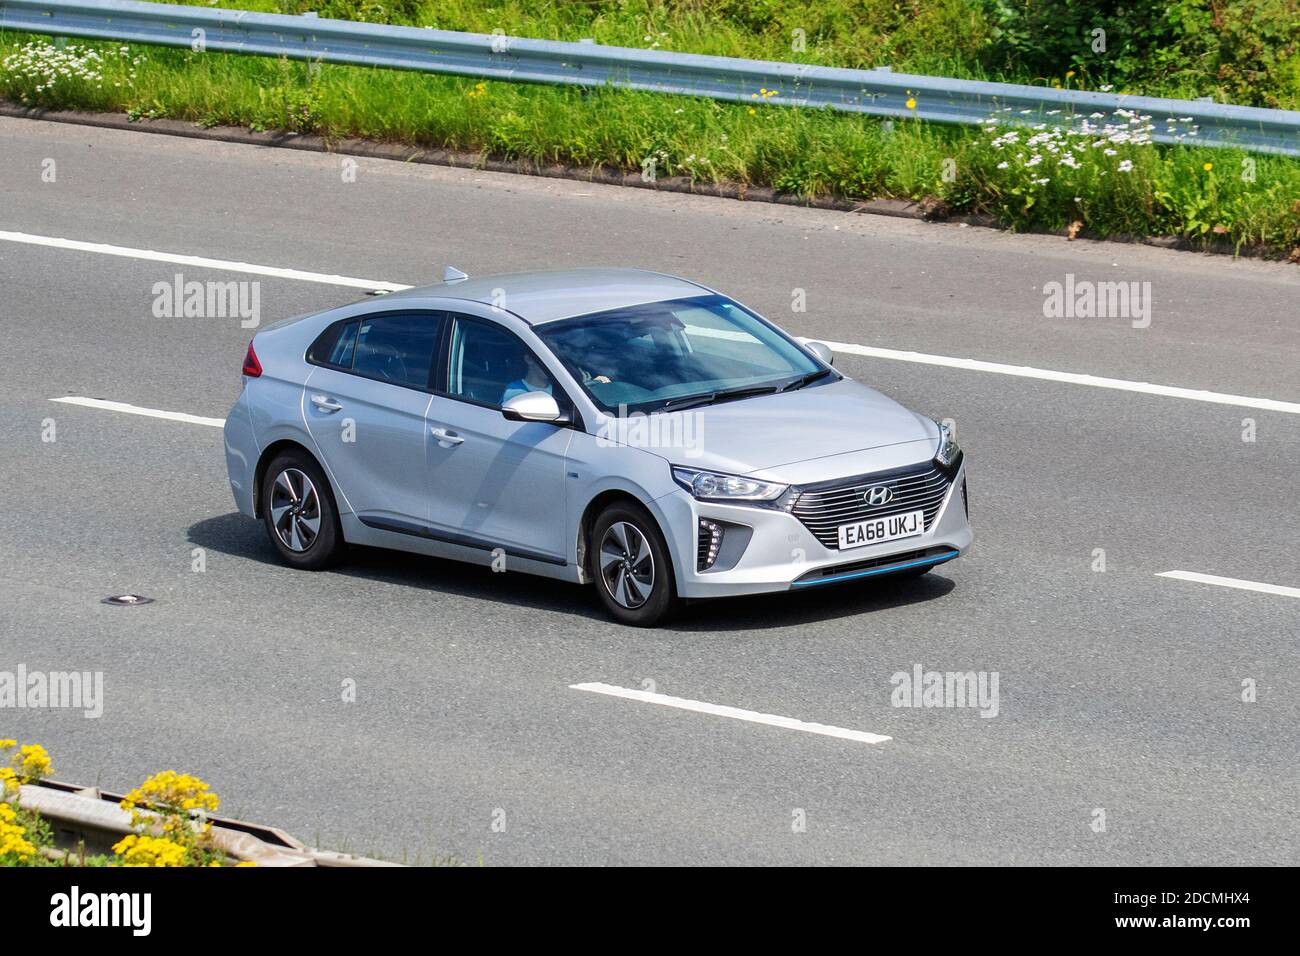 Hyundai i10 hatchback hi-res stock photography and images - Alamy